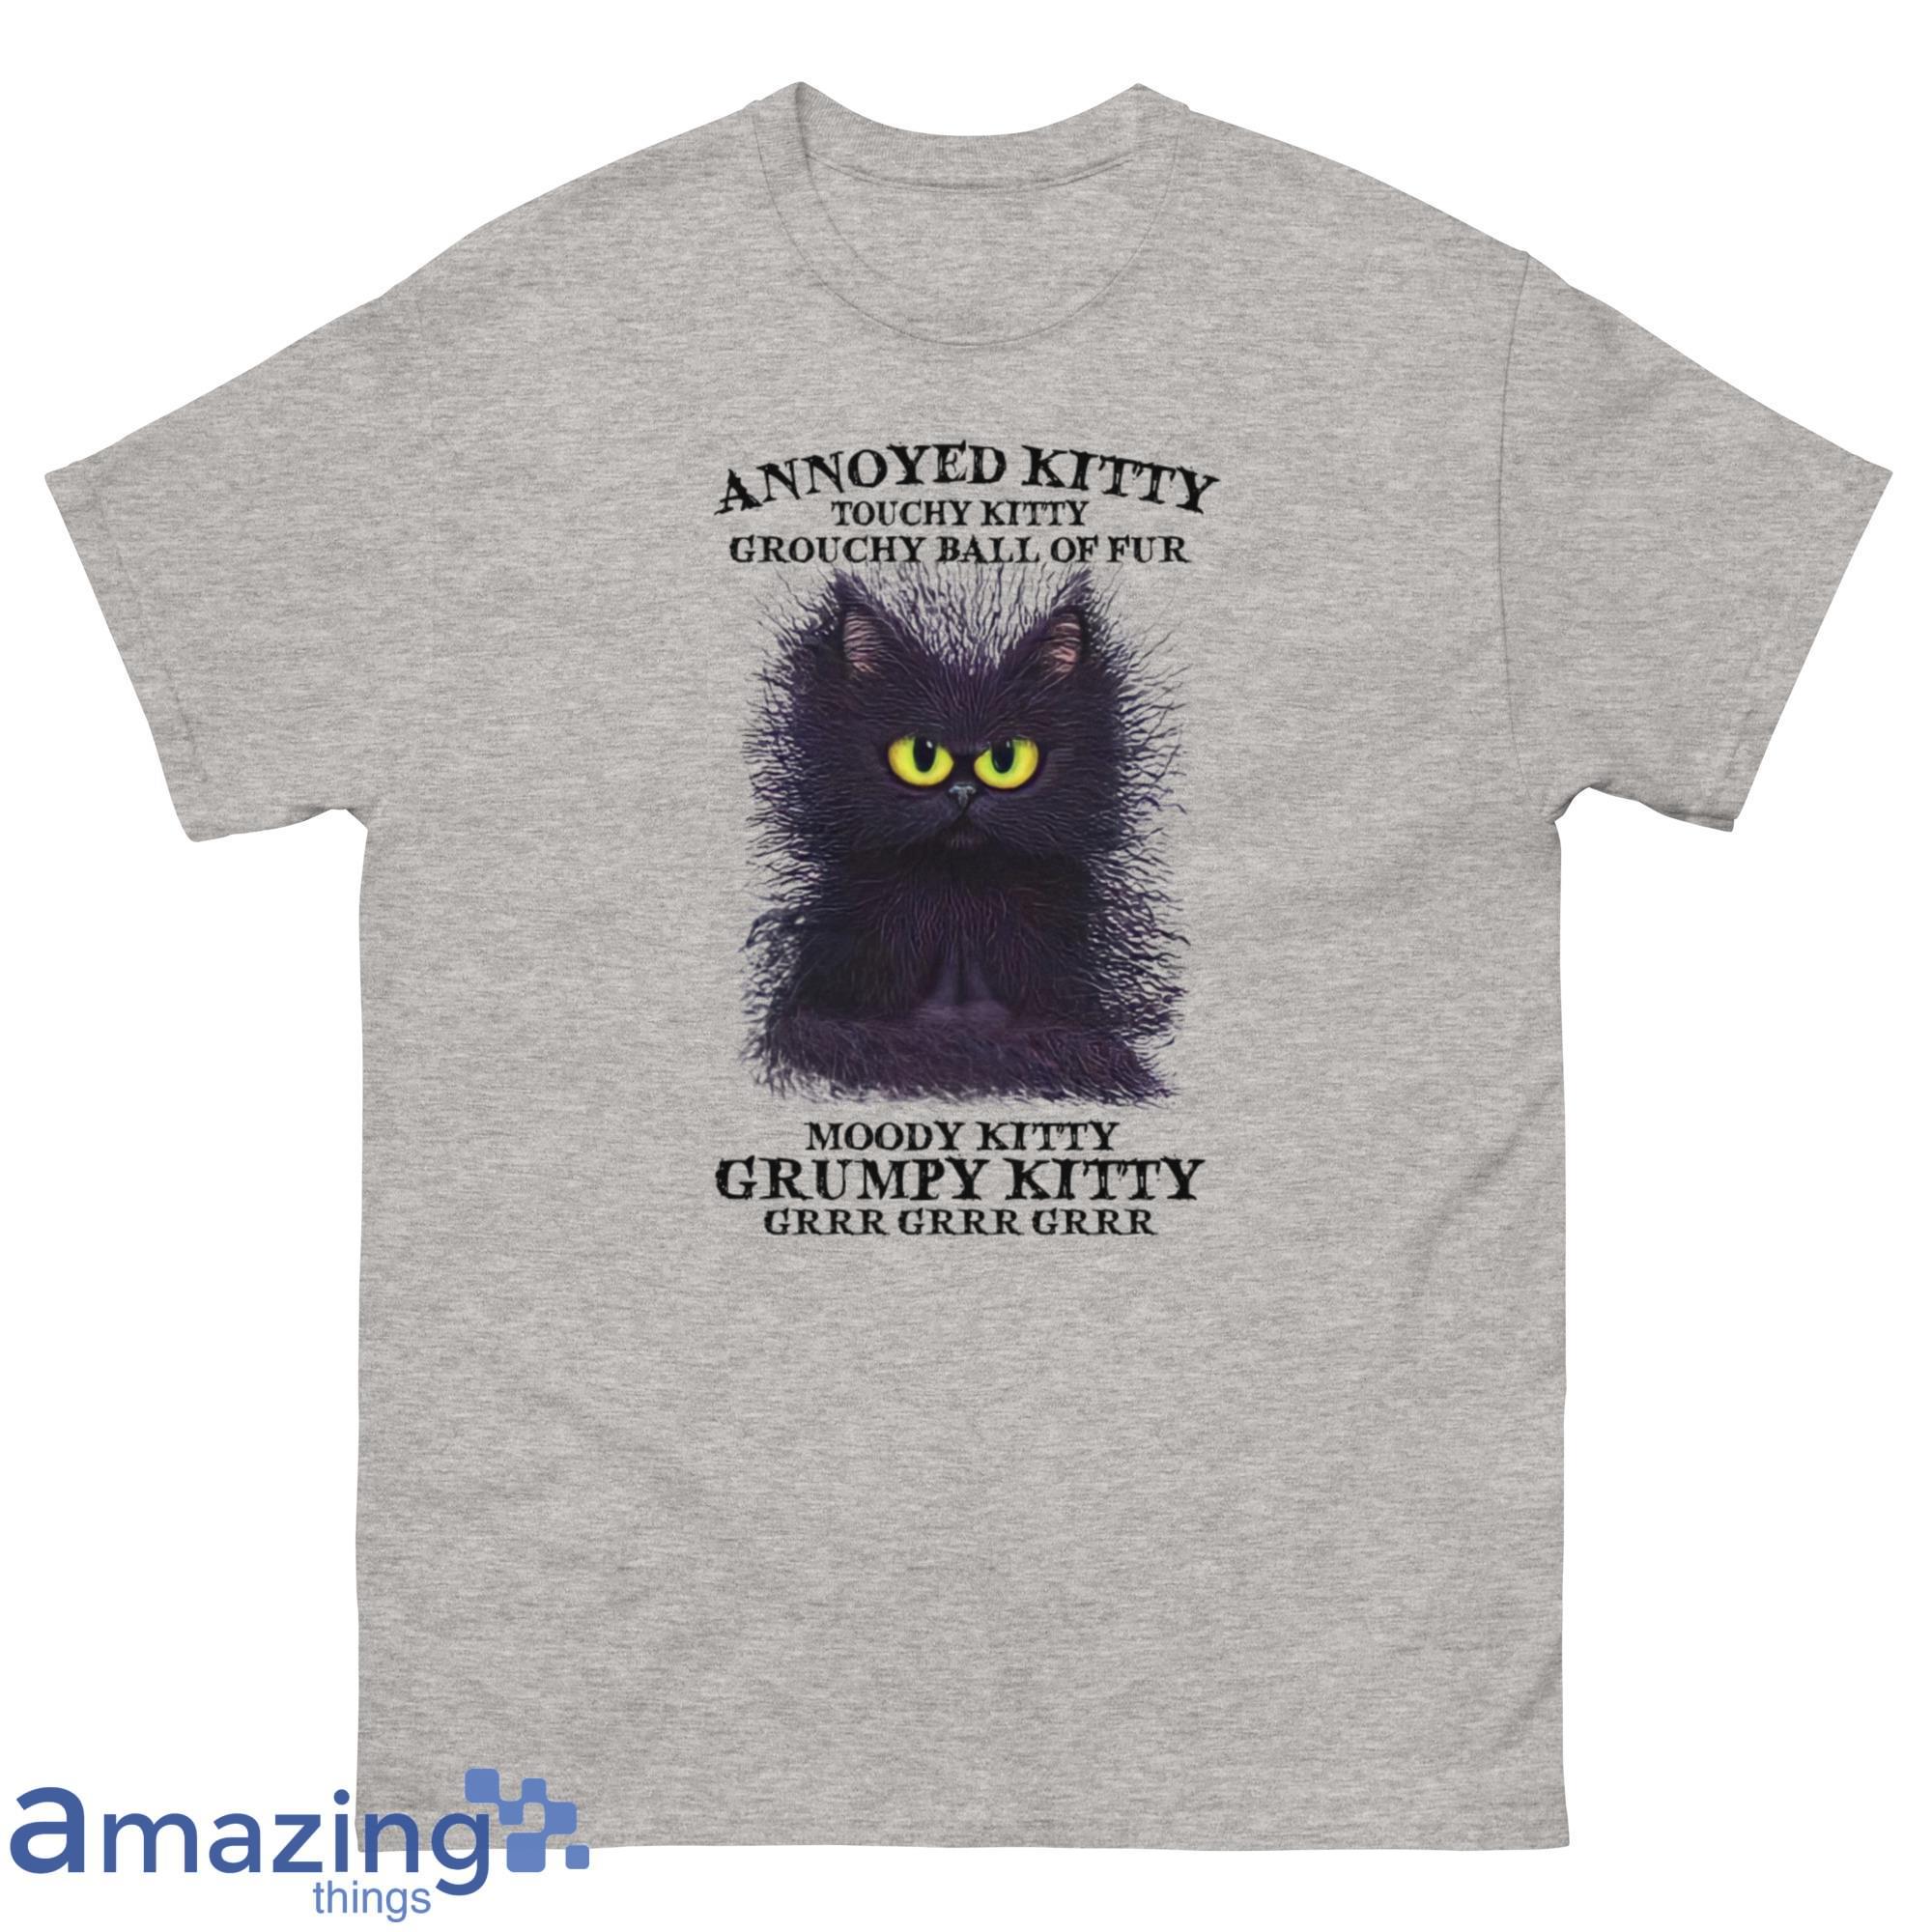 Annoyed Kitty Touhy Kitty Grouchy Ball Of Fur, Moody Kitty Grumpy Kitty Shirt - G500 Men’s Classic T-Shirt